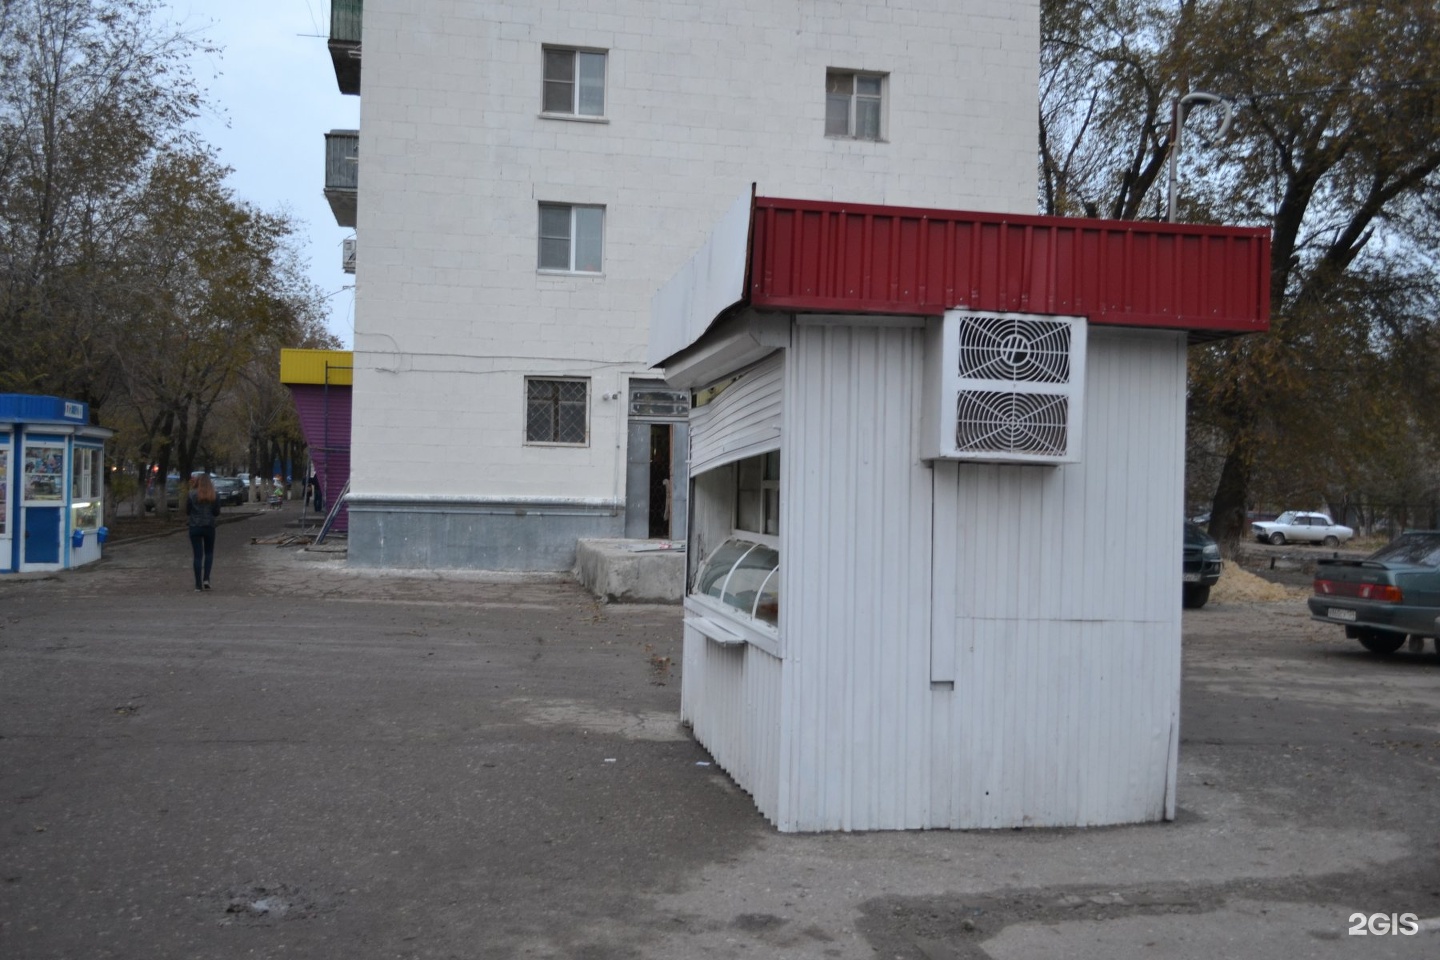 Автомагазин Волгоград овощная база. Армейская 22